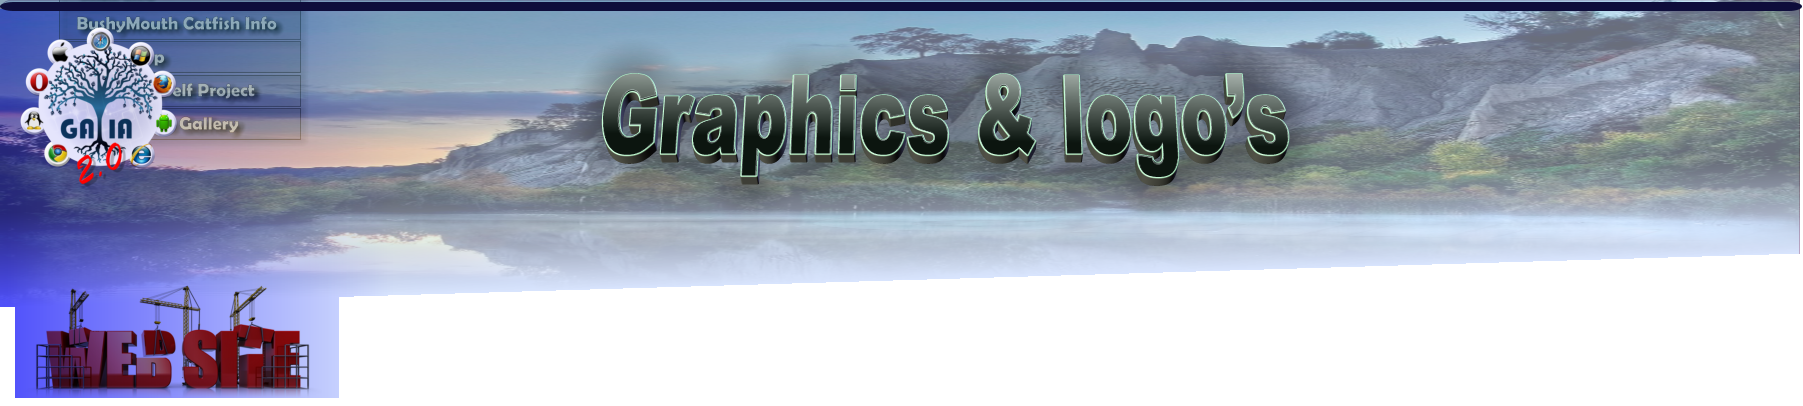 Graphics & logos